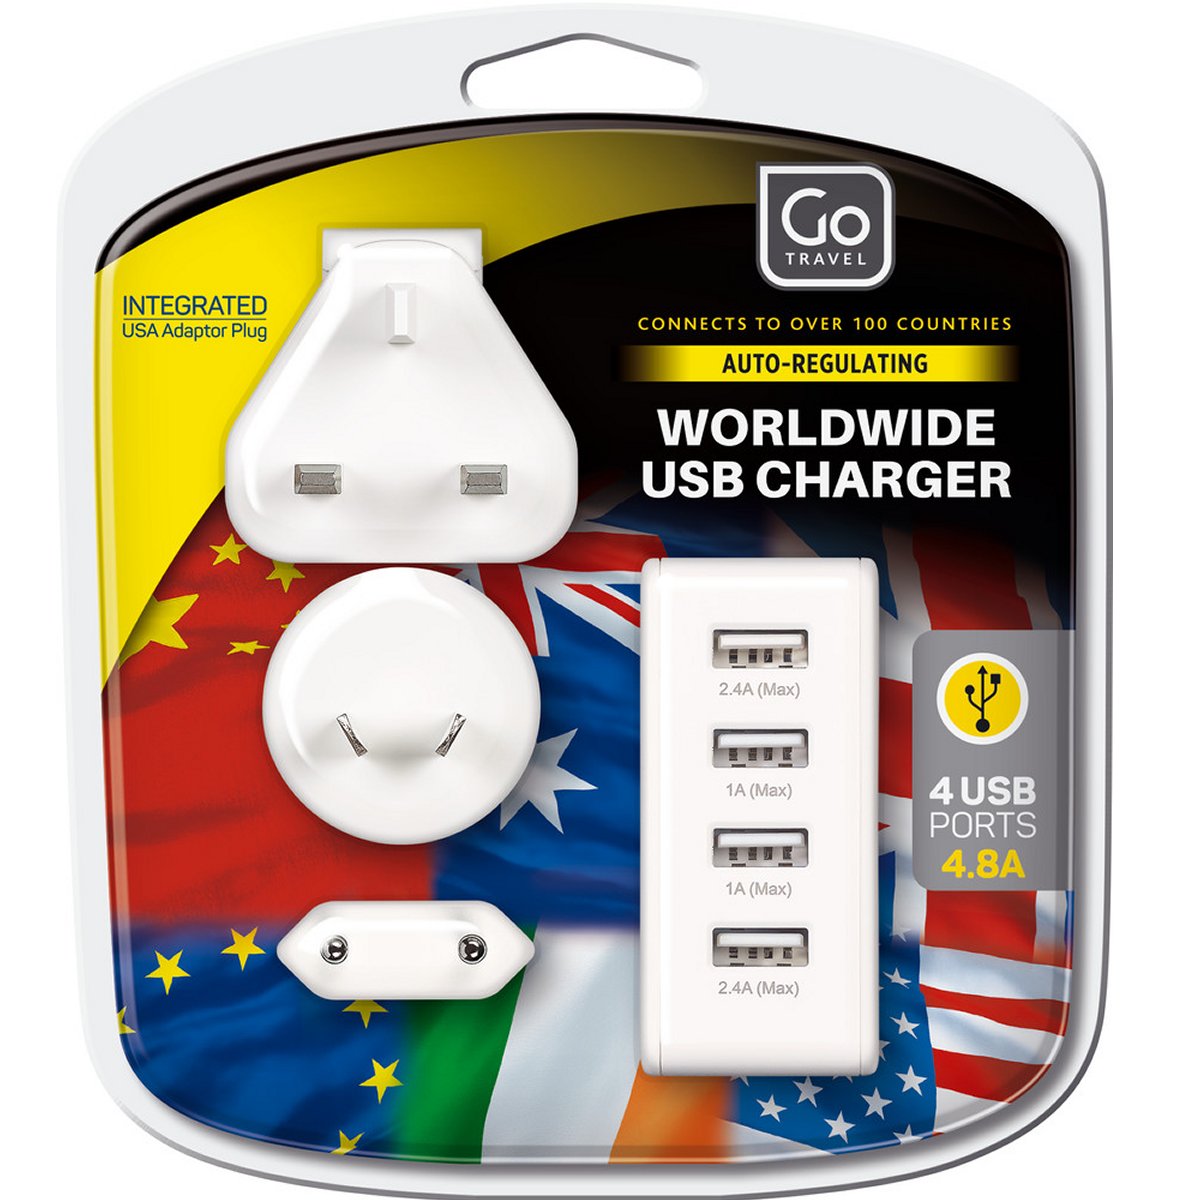 Image of Worldwide USB Charger